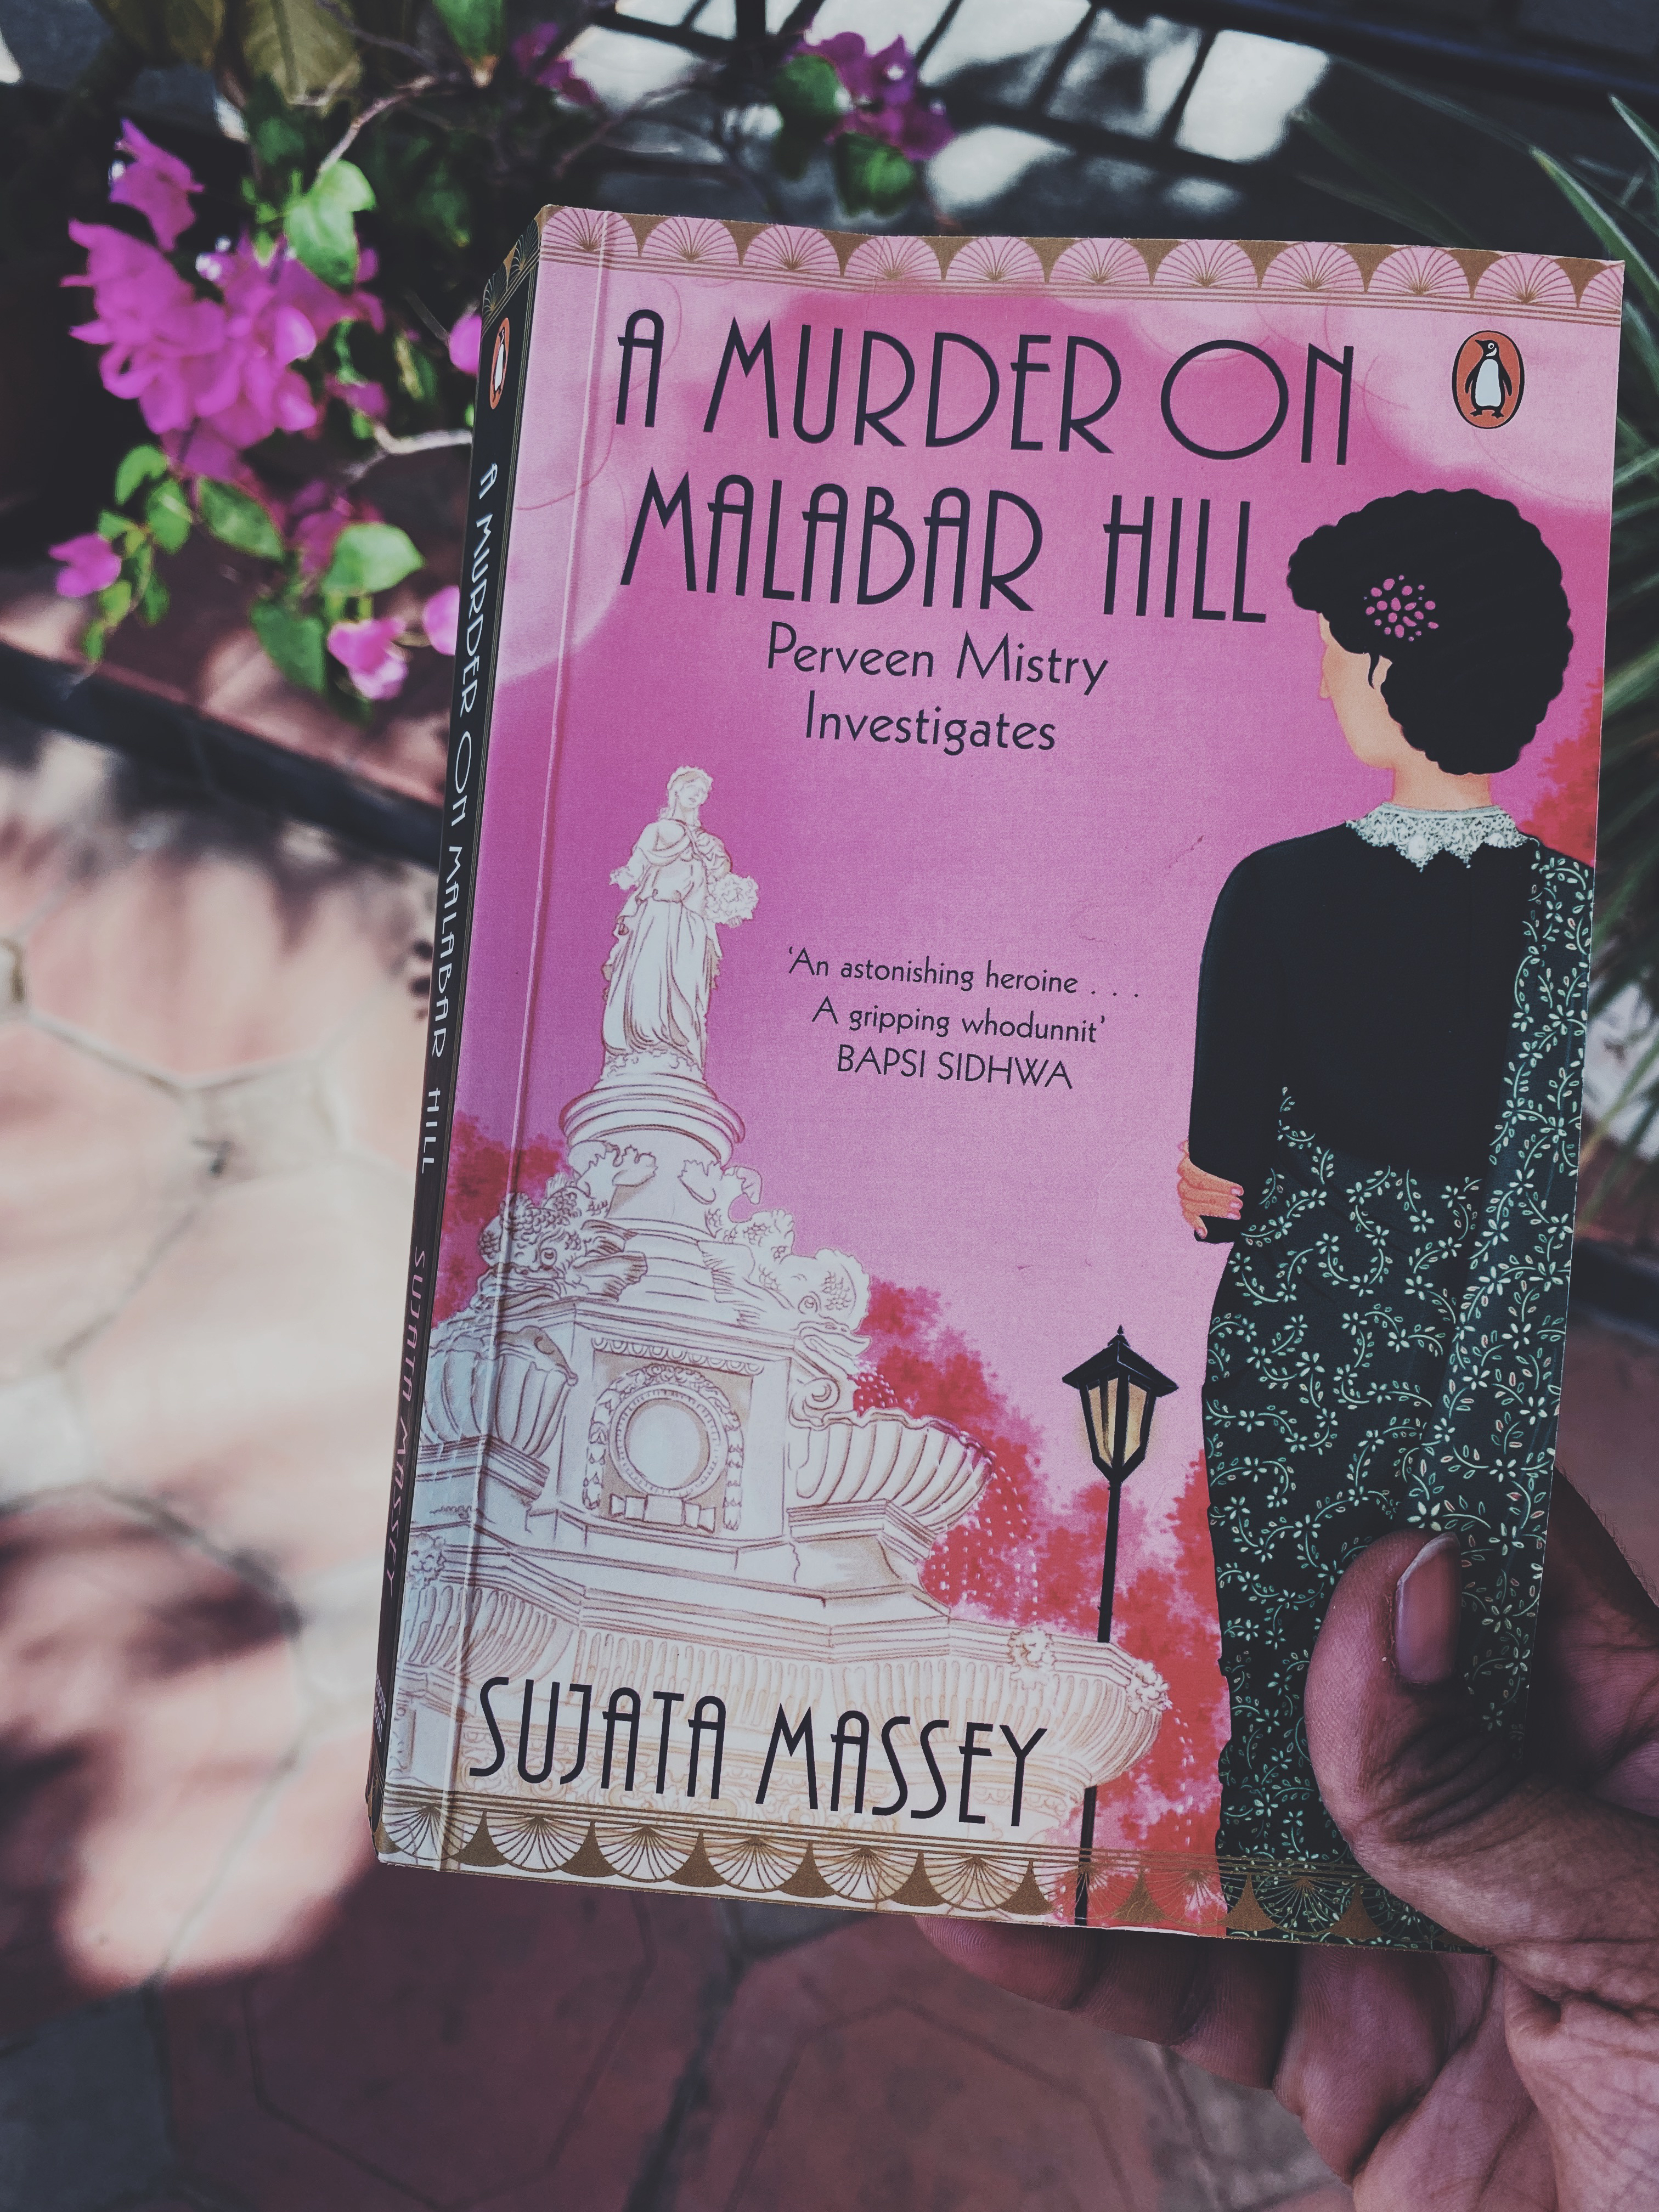 A Murder on Malabar Hill